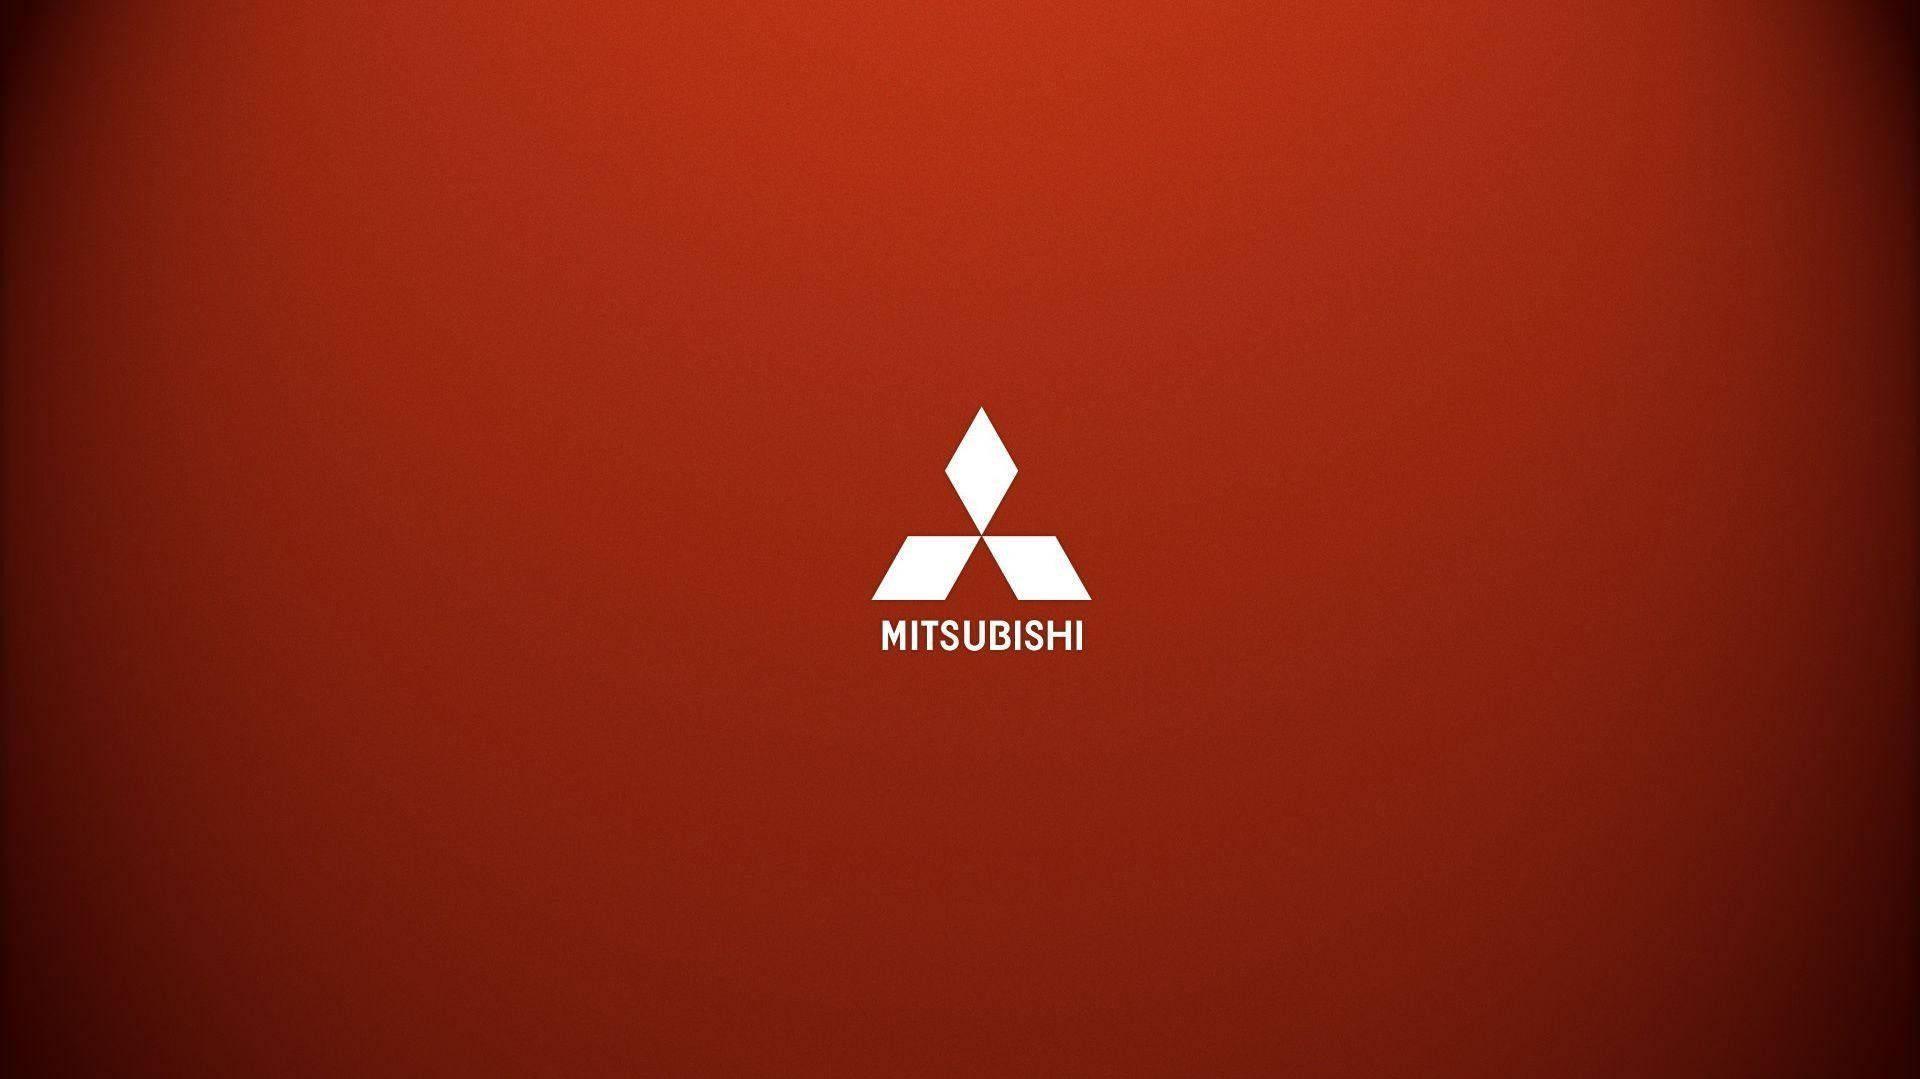 Mitsubishi HD Wallpaper Background Mrwallpaper